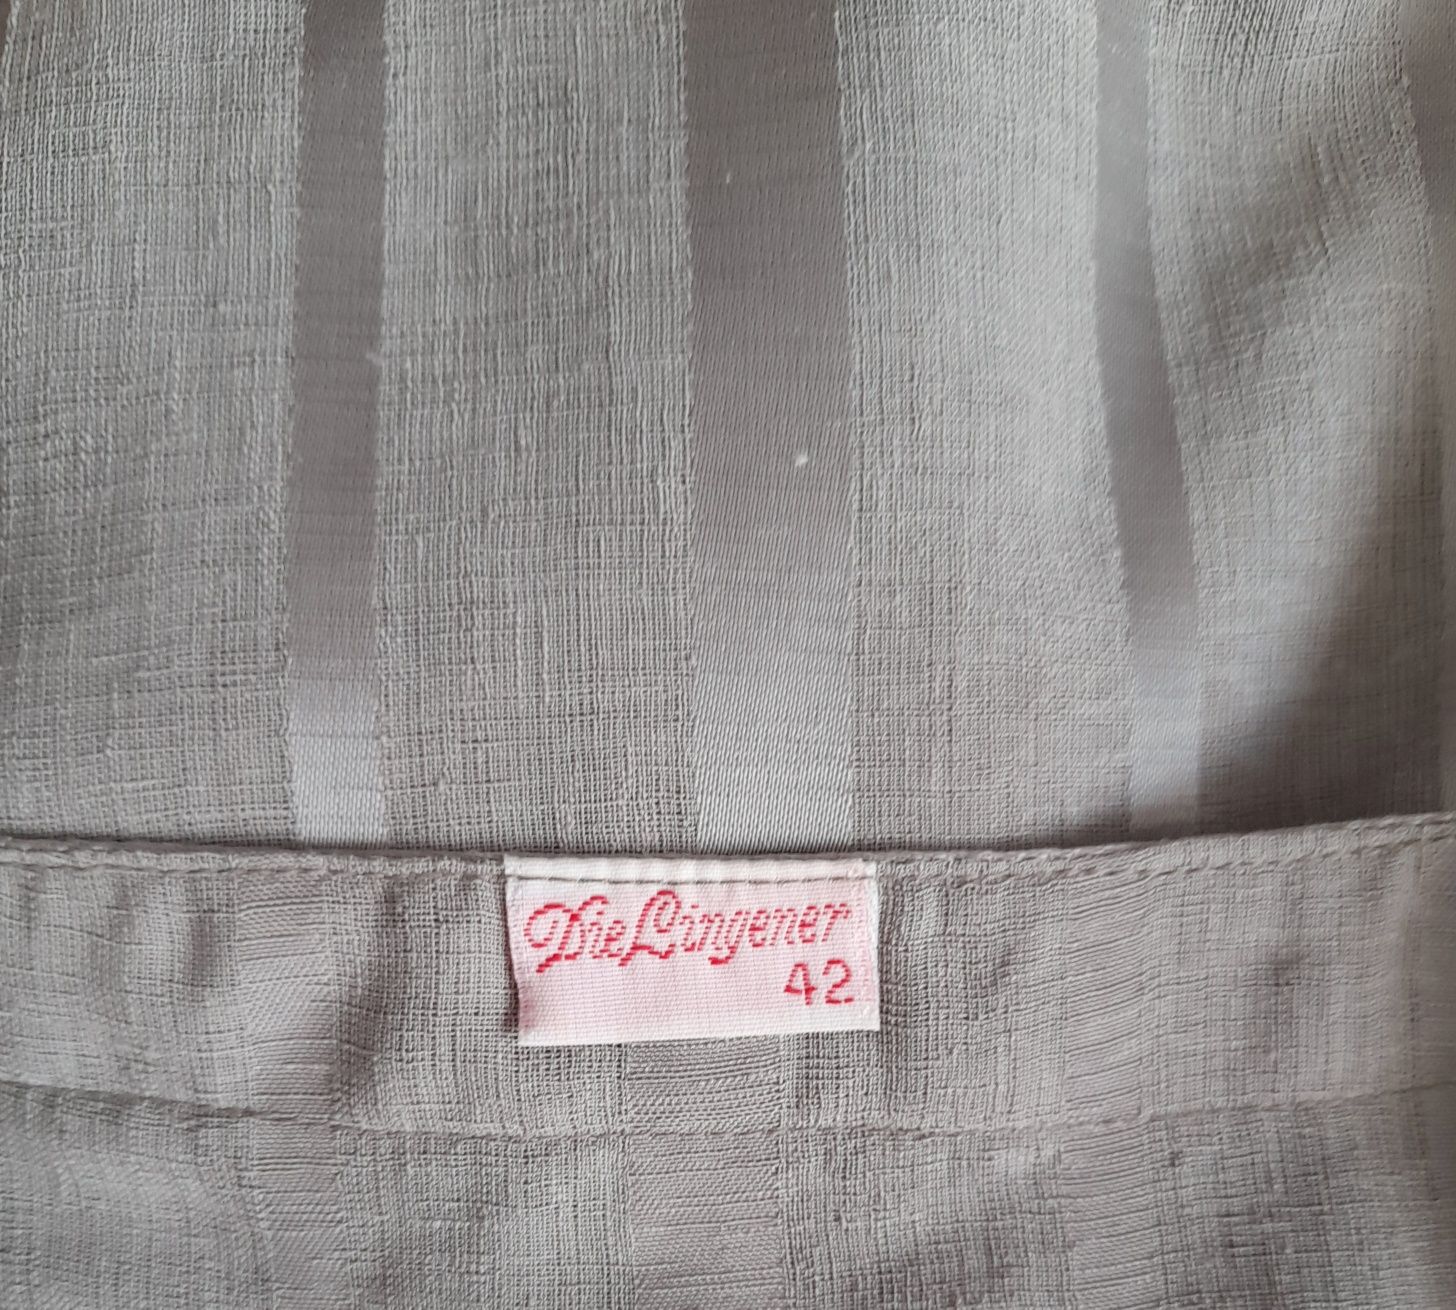 Blusa Vintage 80s, cinza, com riscas acetinadas.  Tamanho L